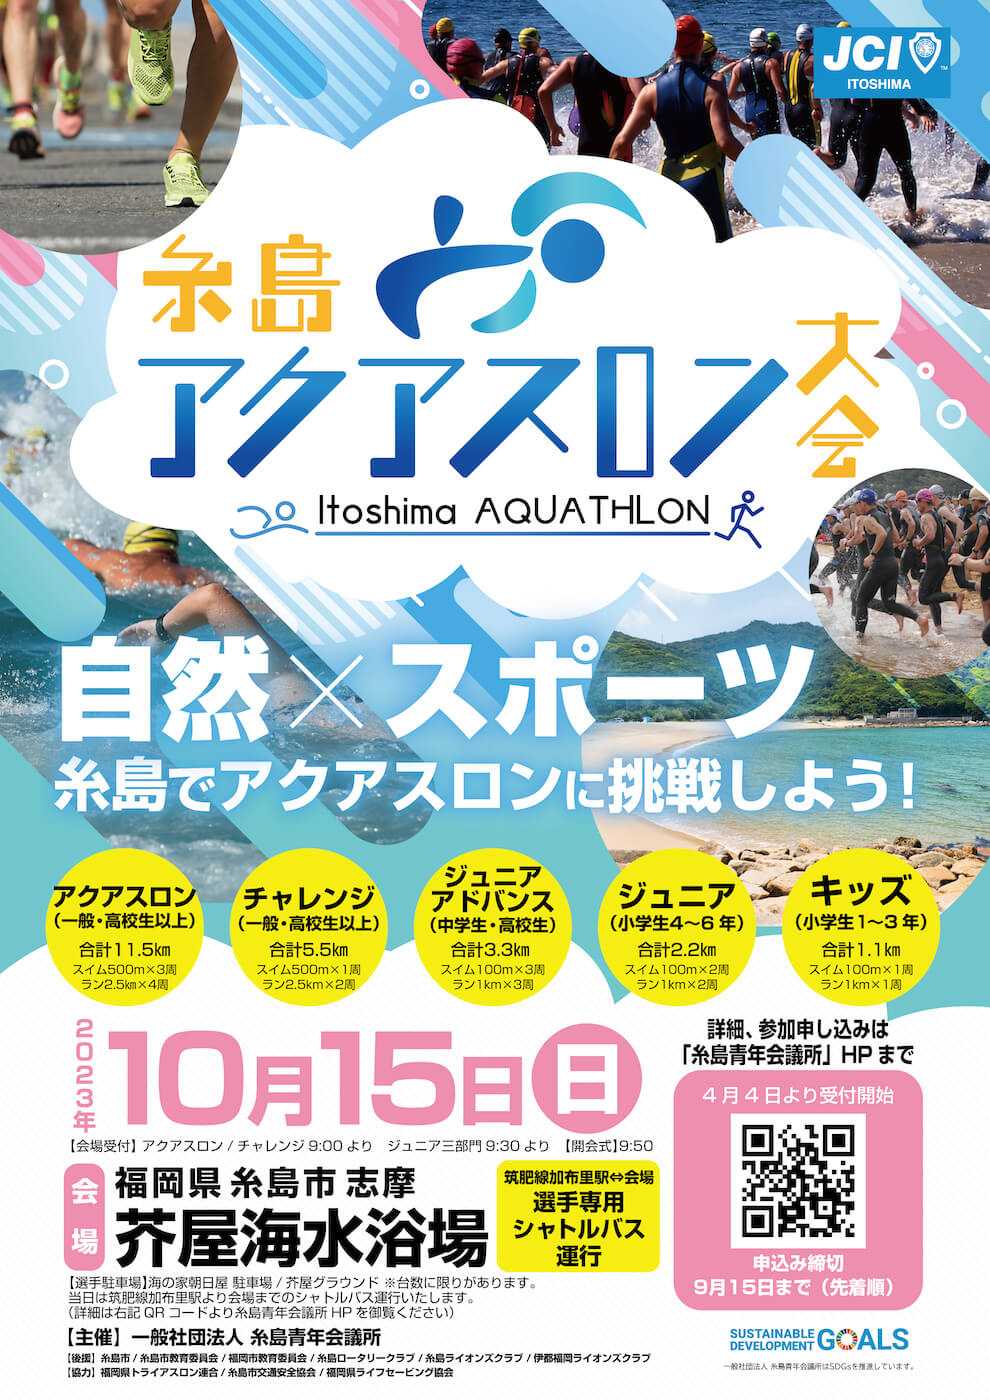 Itoshima Aquathlon, 糸島アクアスロン